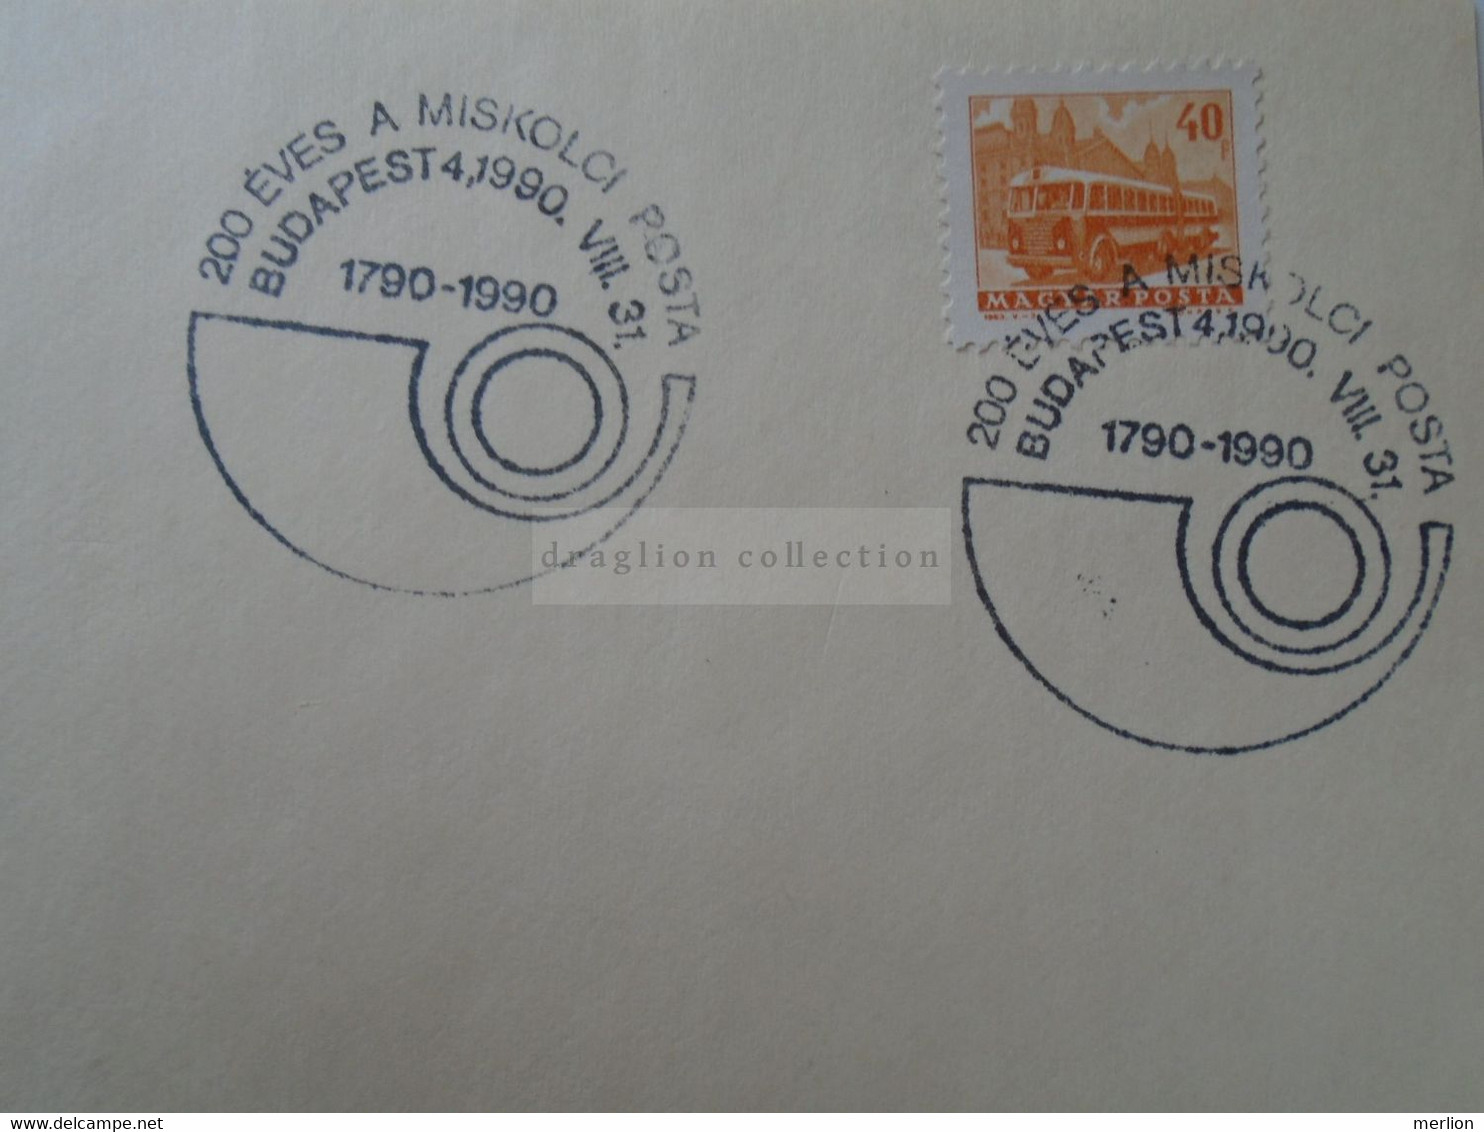 D187084   HUNGARY  Postmark     MAGYAR POSTA   - Hungarian Post - 200 éves  A Miskolci Posta  1790-1990 - Storia Postale